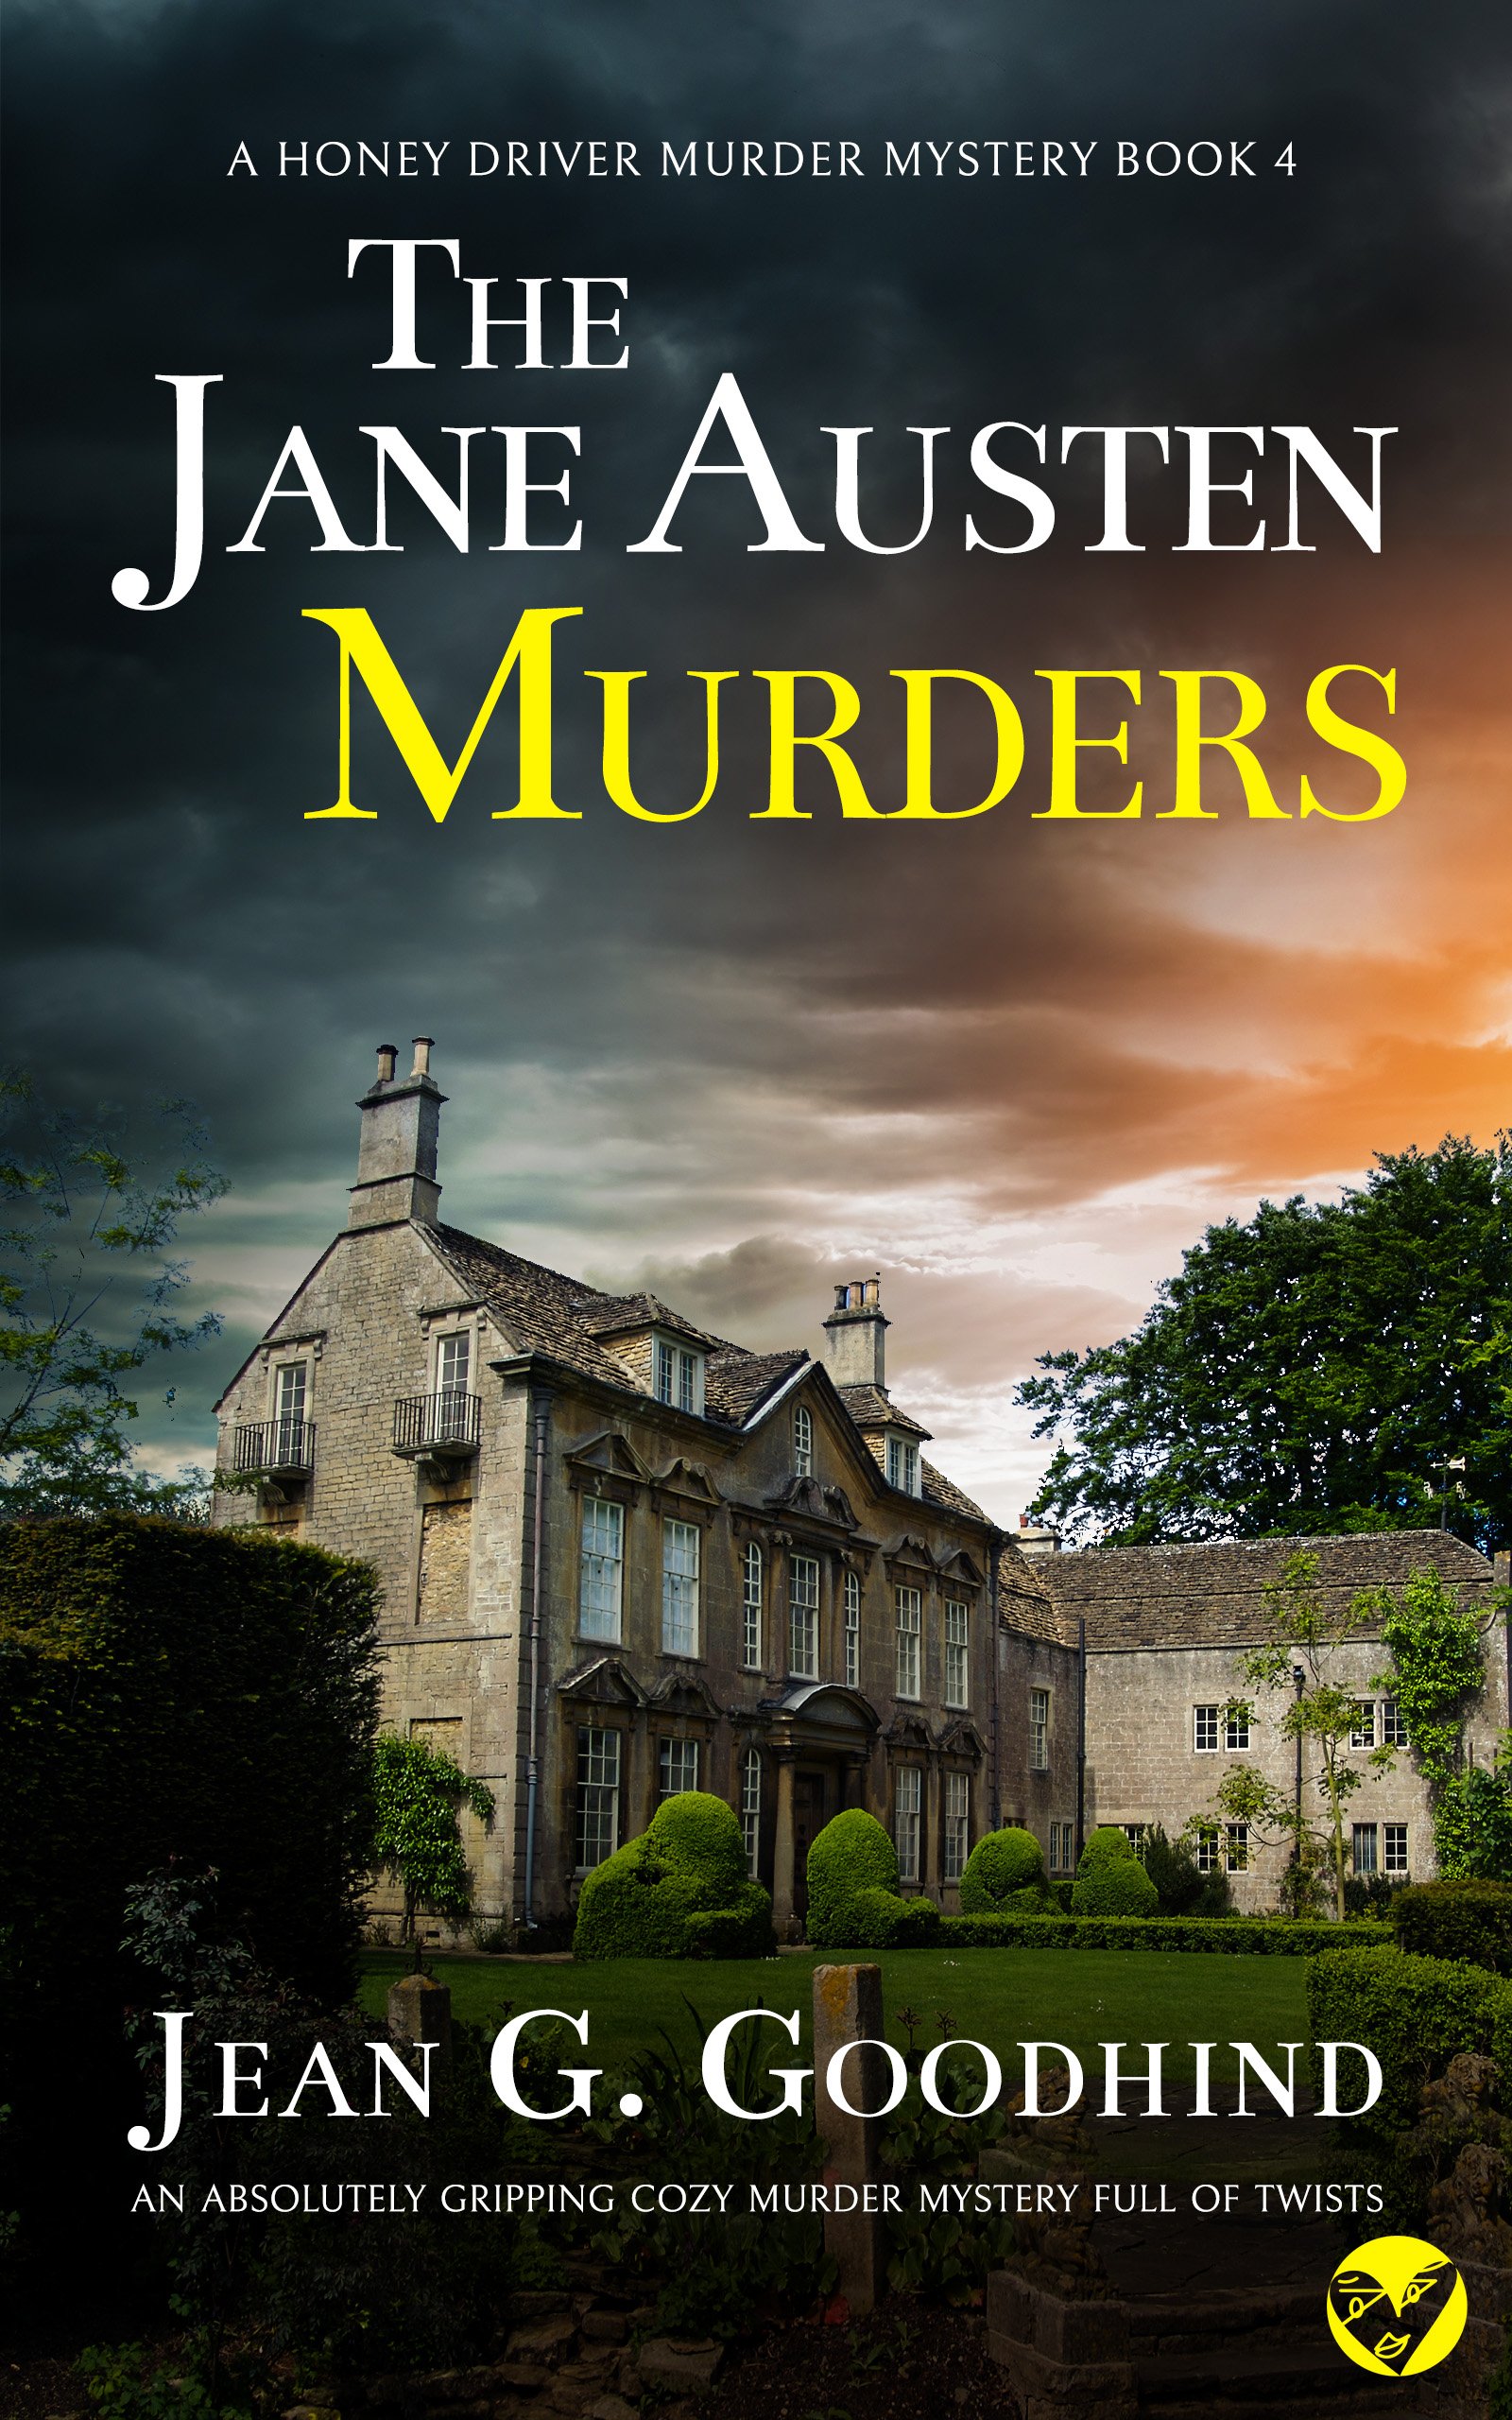 THE JANE AUSTEN MURDERS publish cover.jpg